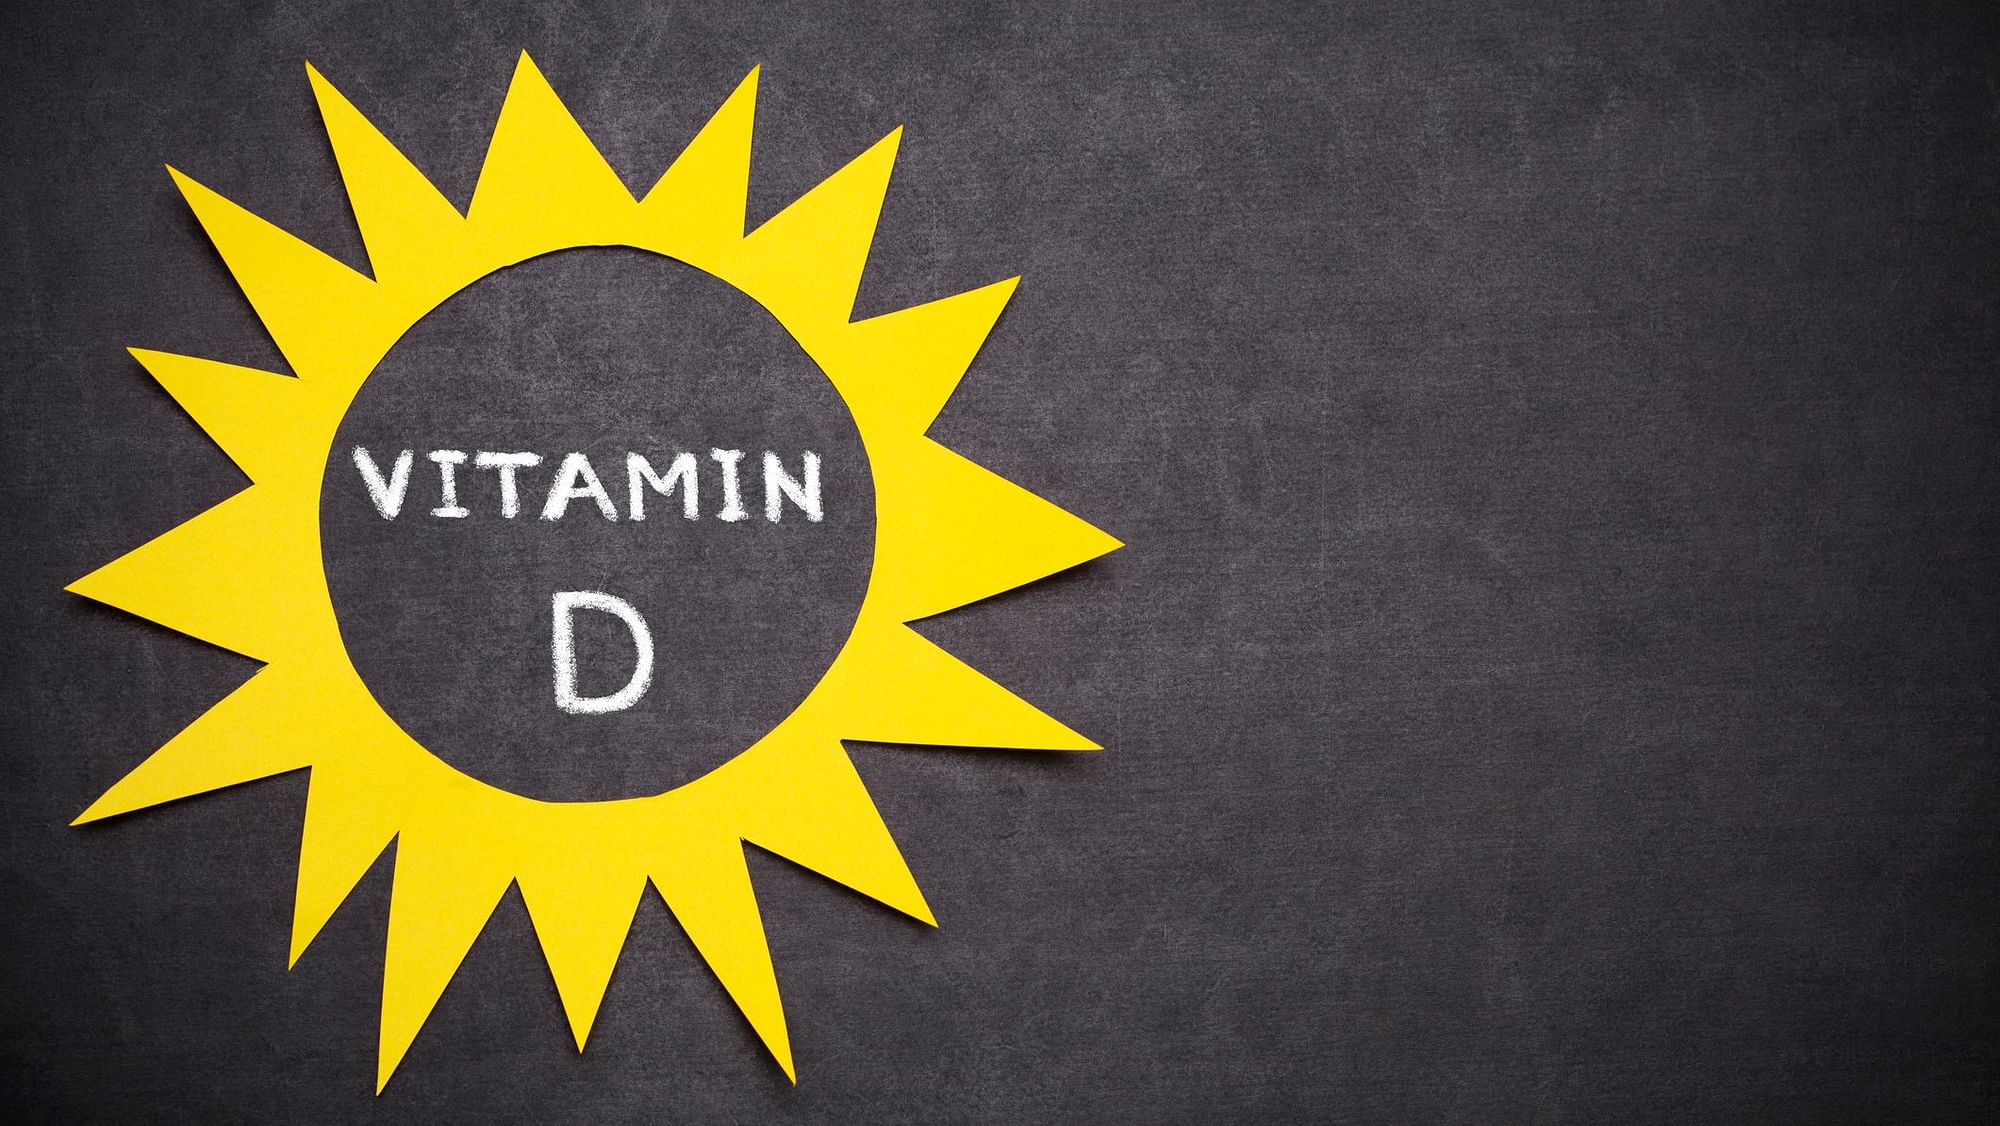 Sun vitamin. Витамин д солнце. Витамин d. Солнечный витамин d. Витамин д реклама.